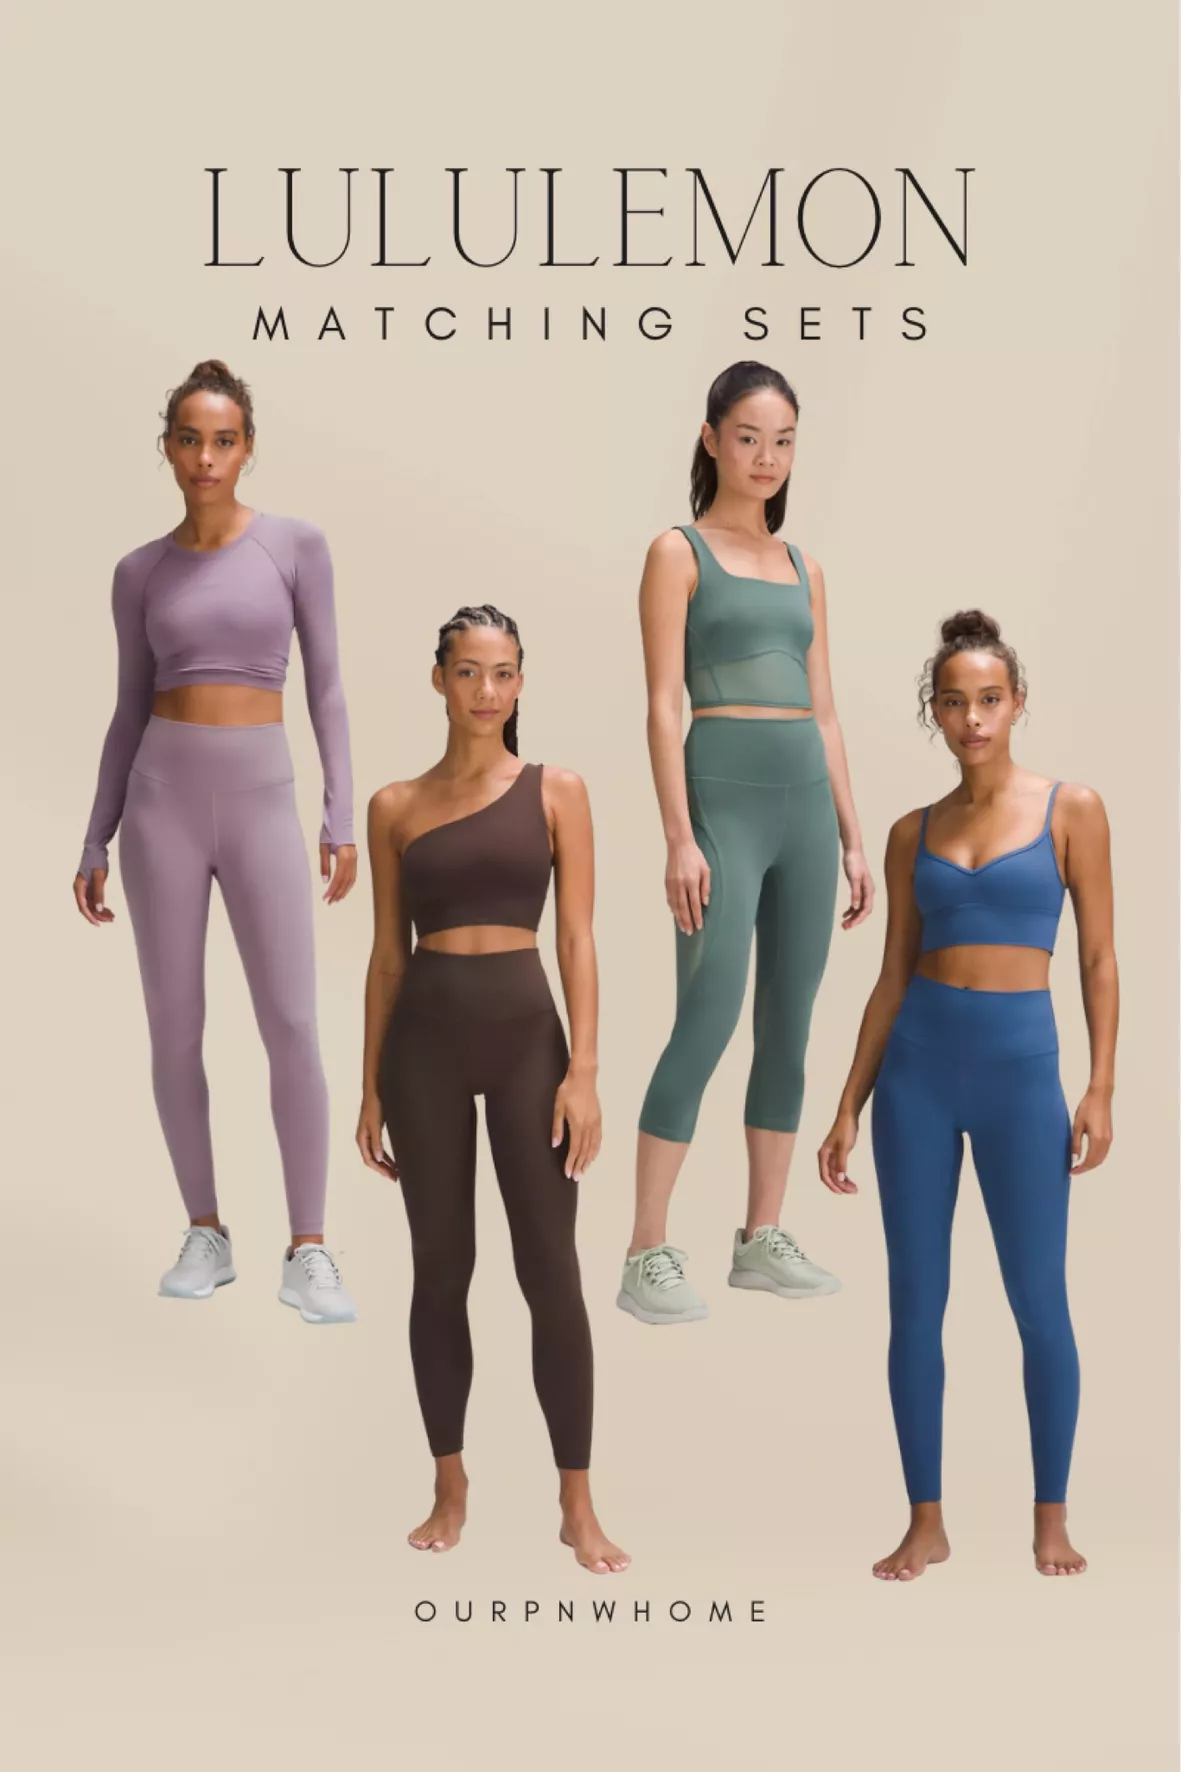 women's athletic clothing sets workout set